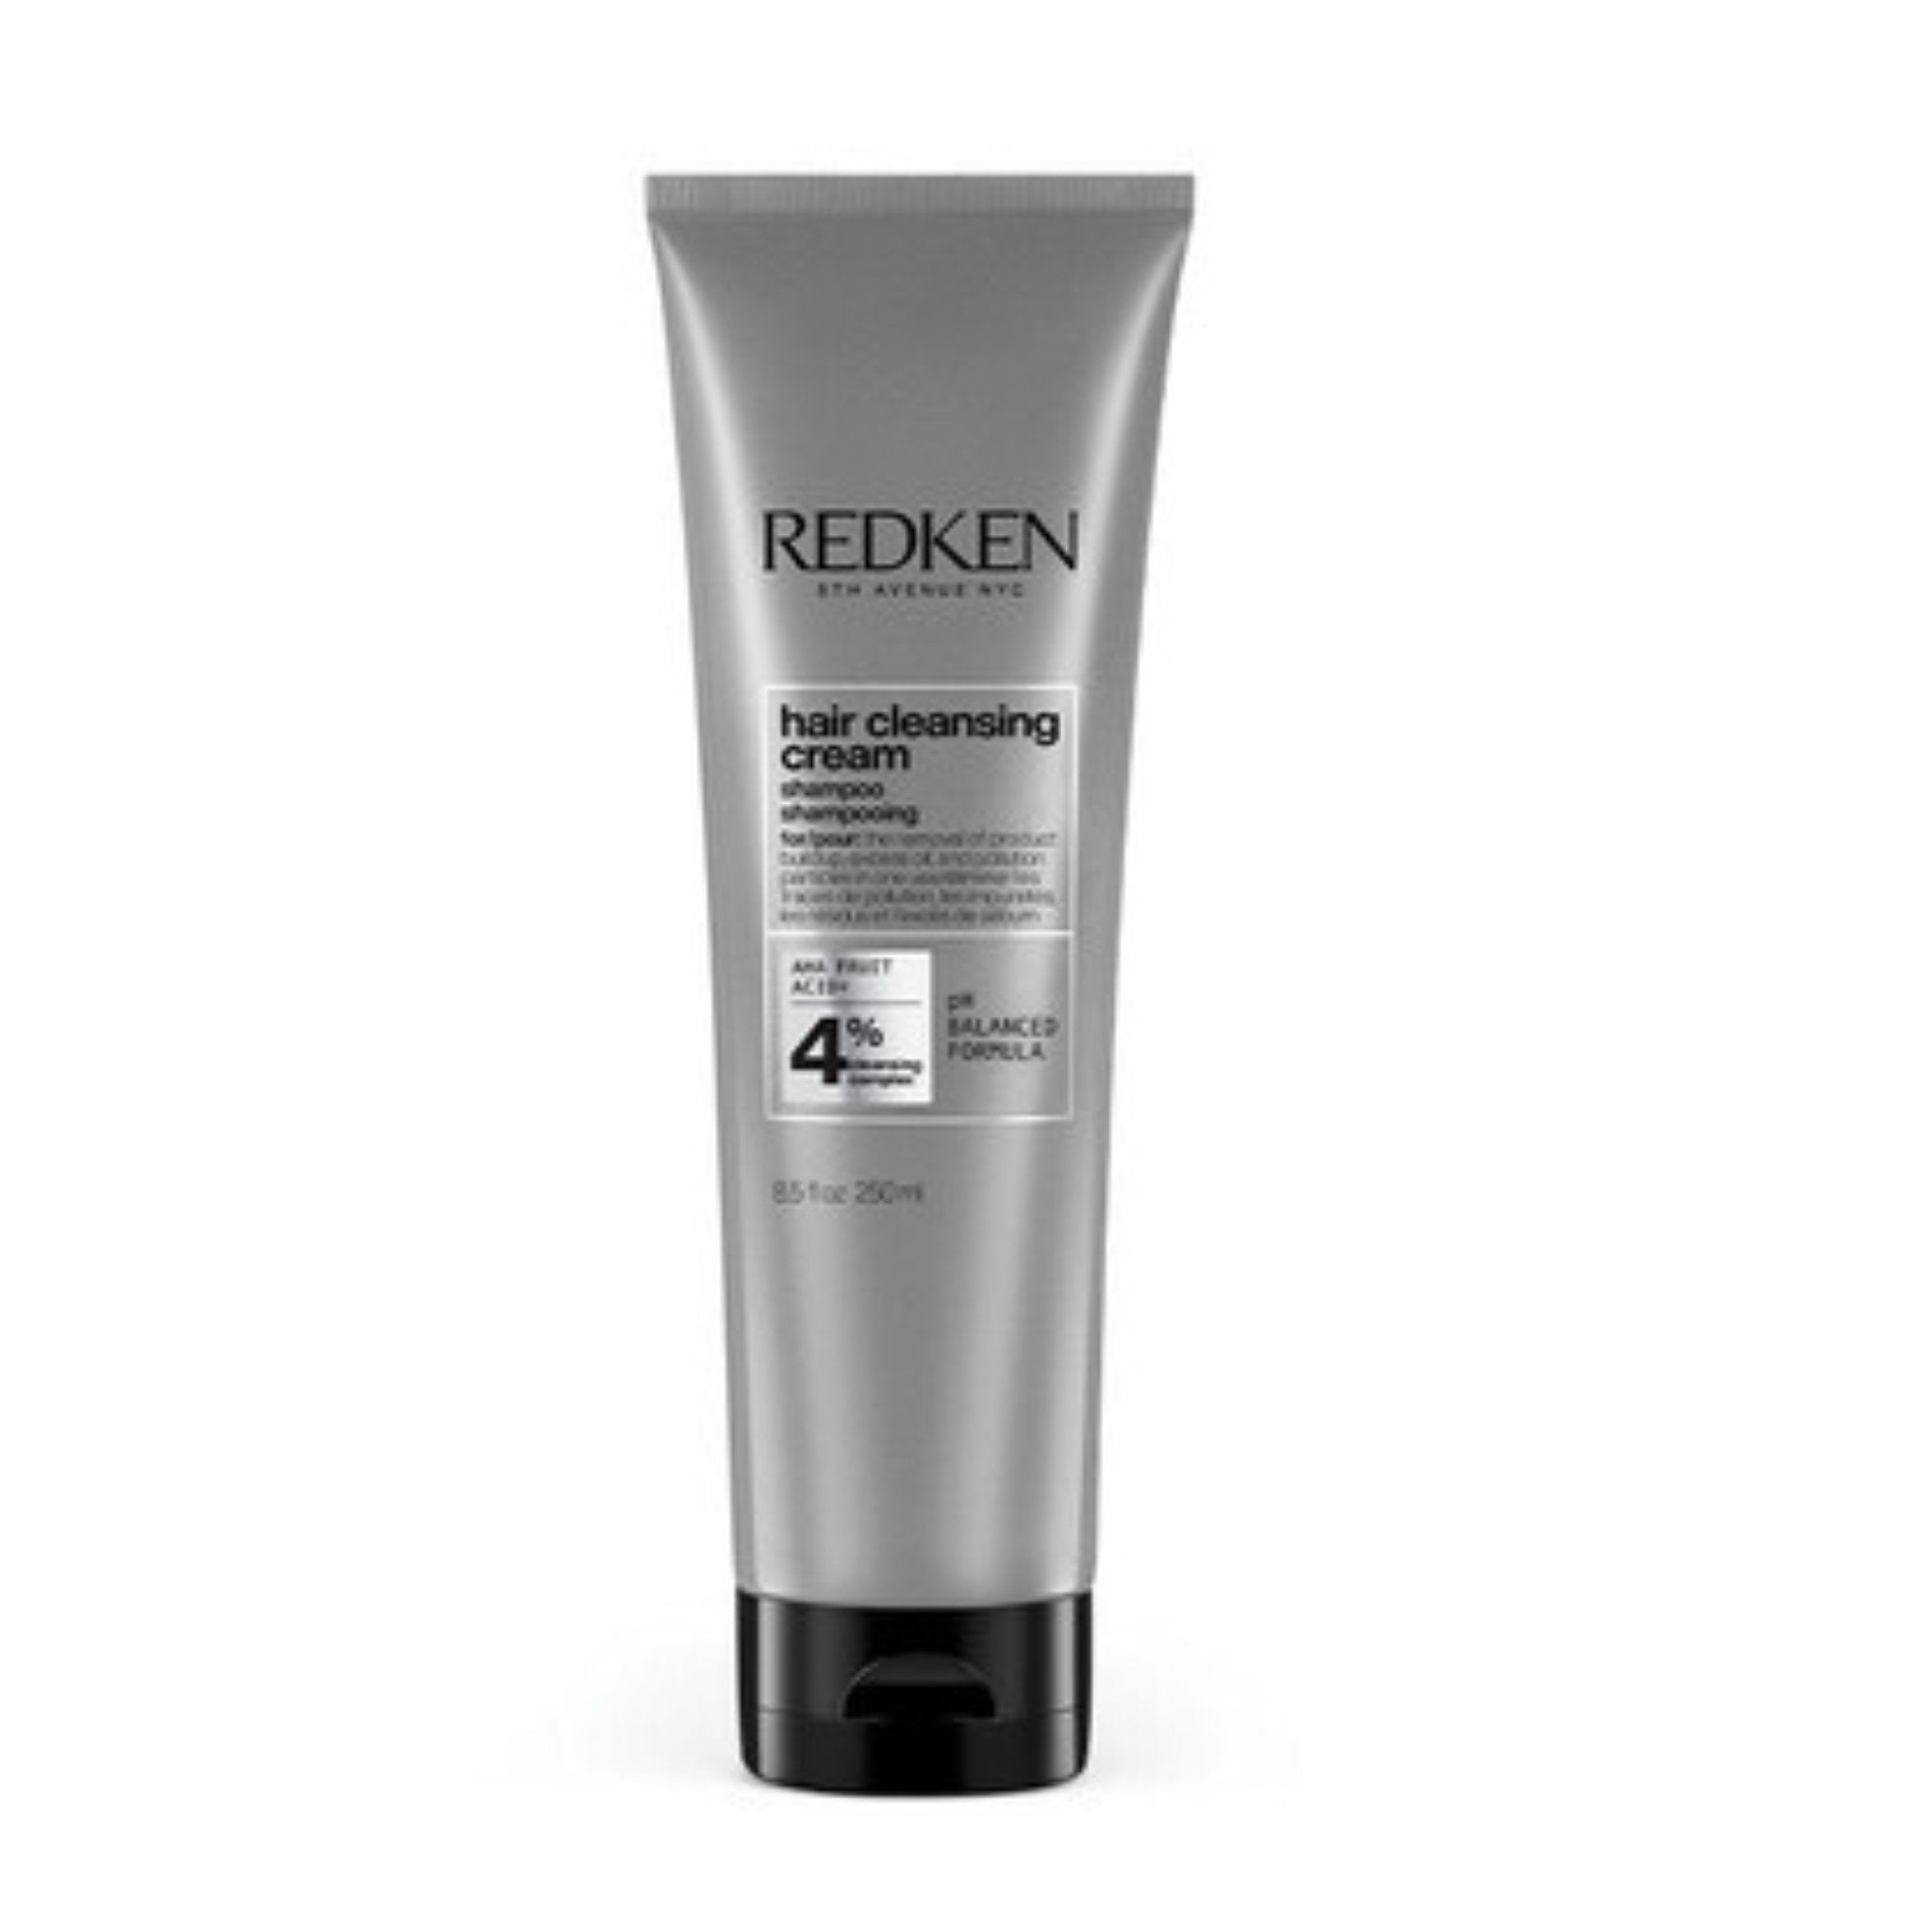 Redken. Shampoing Clarifiant Hair Cleansing Cream - 250 ml - Concept C. Shop